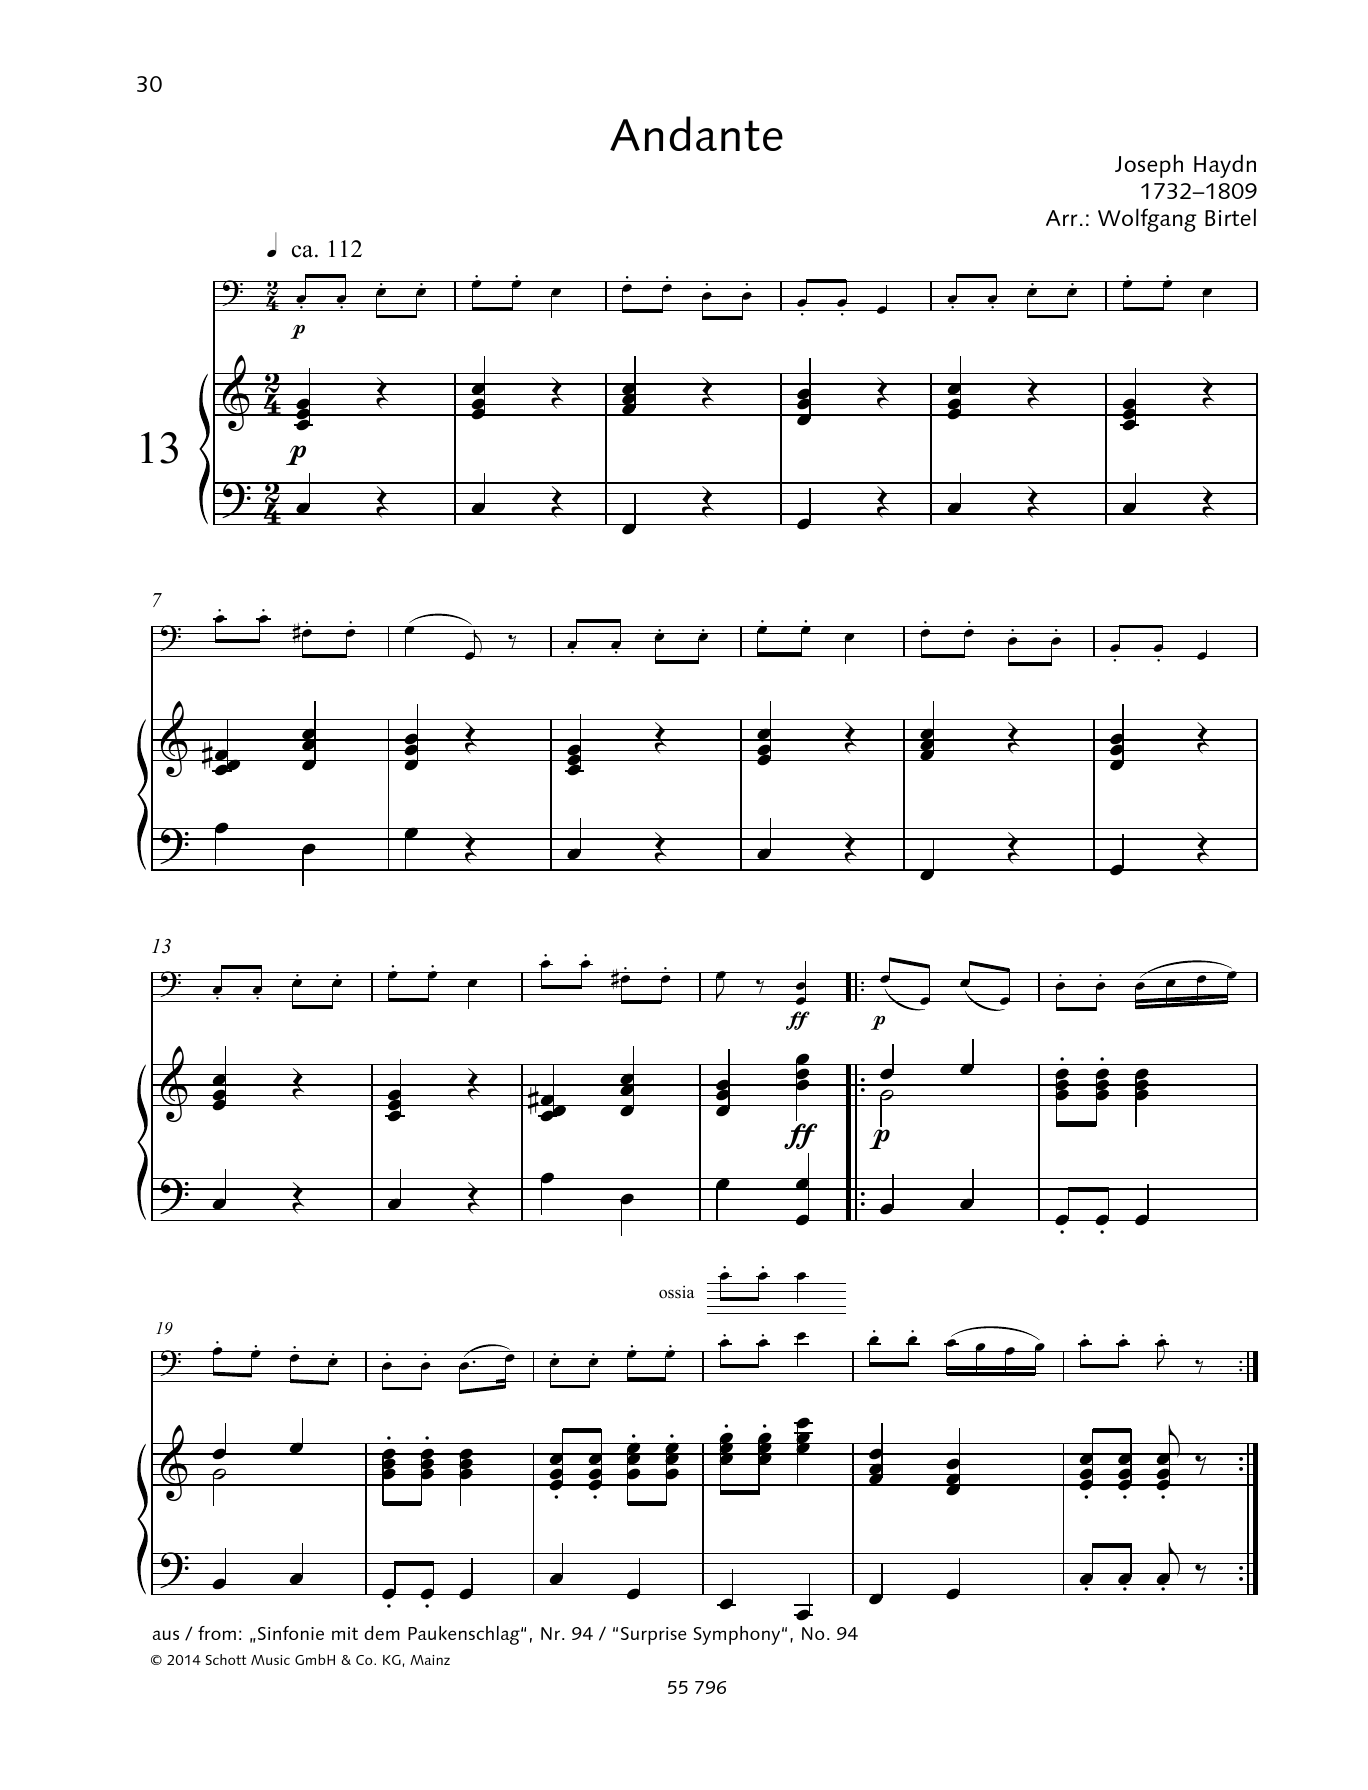 Download Joseph Haydn Andante Sheet Music